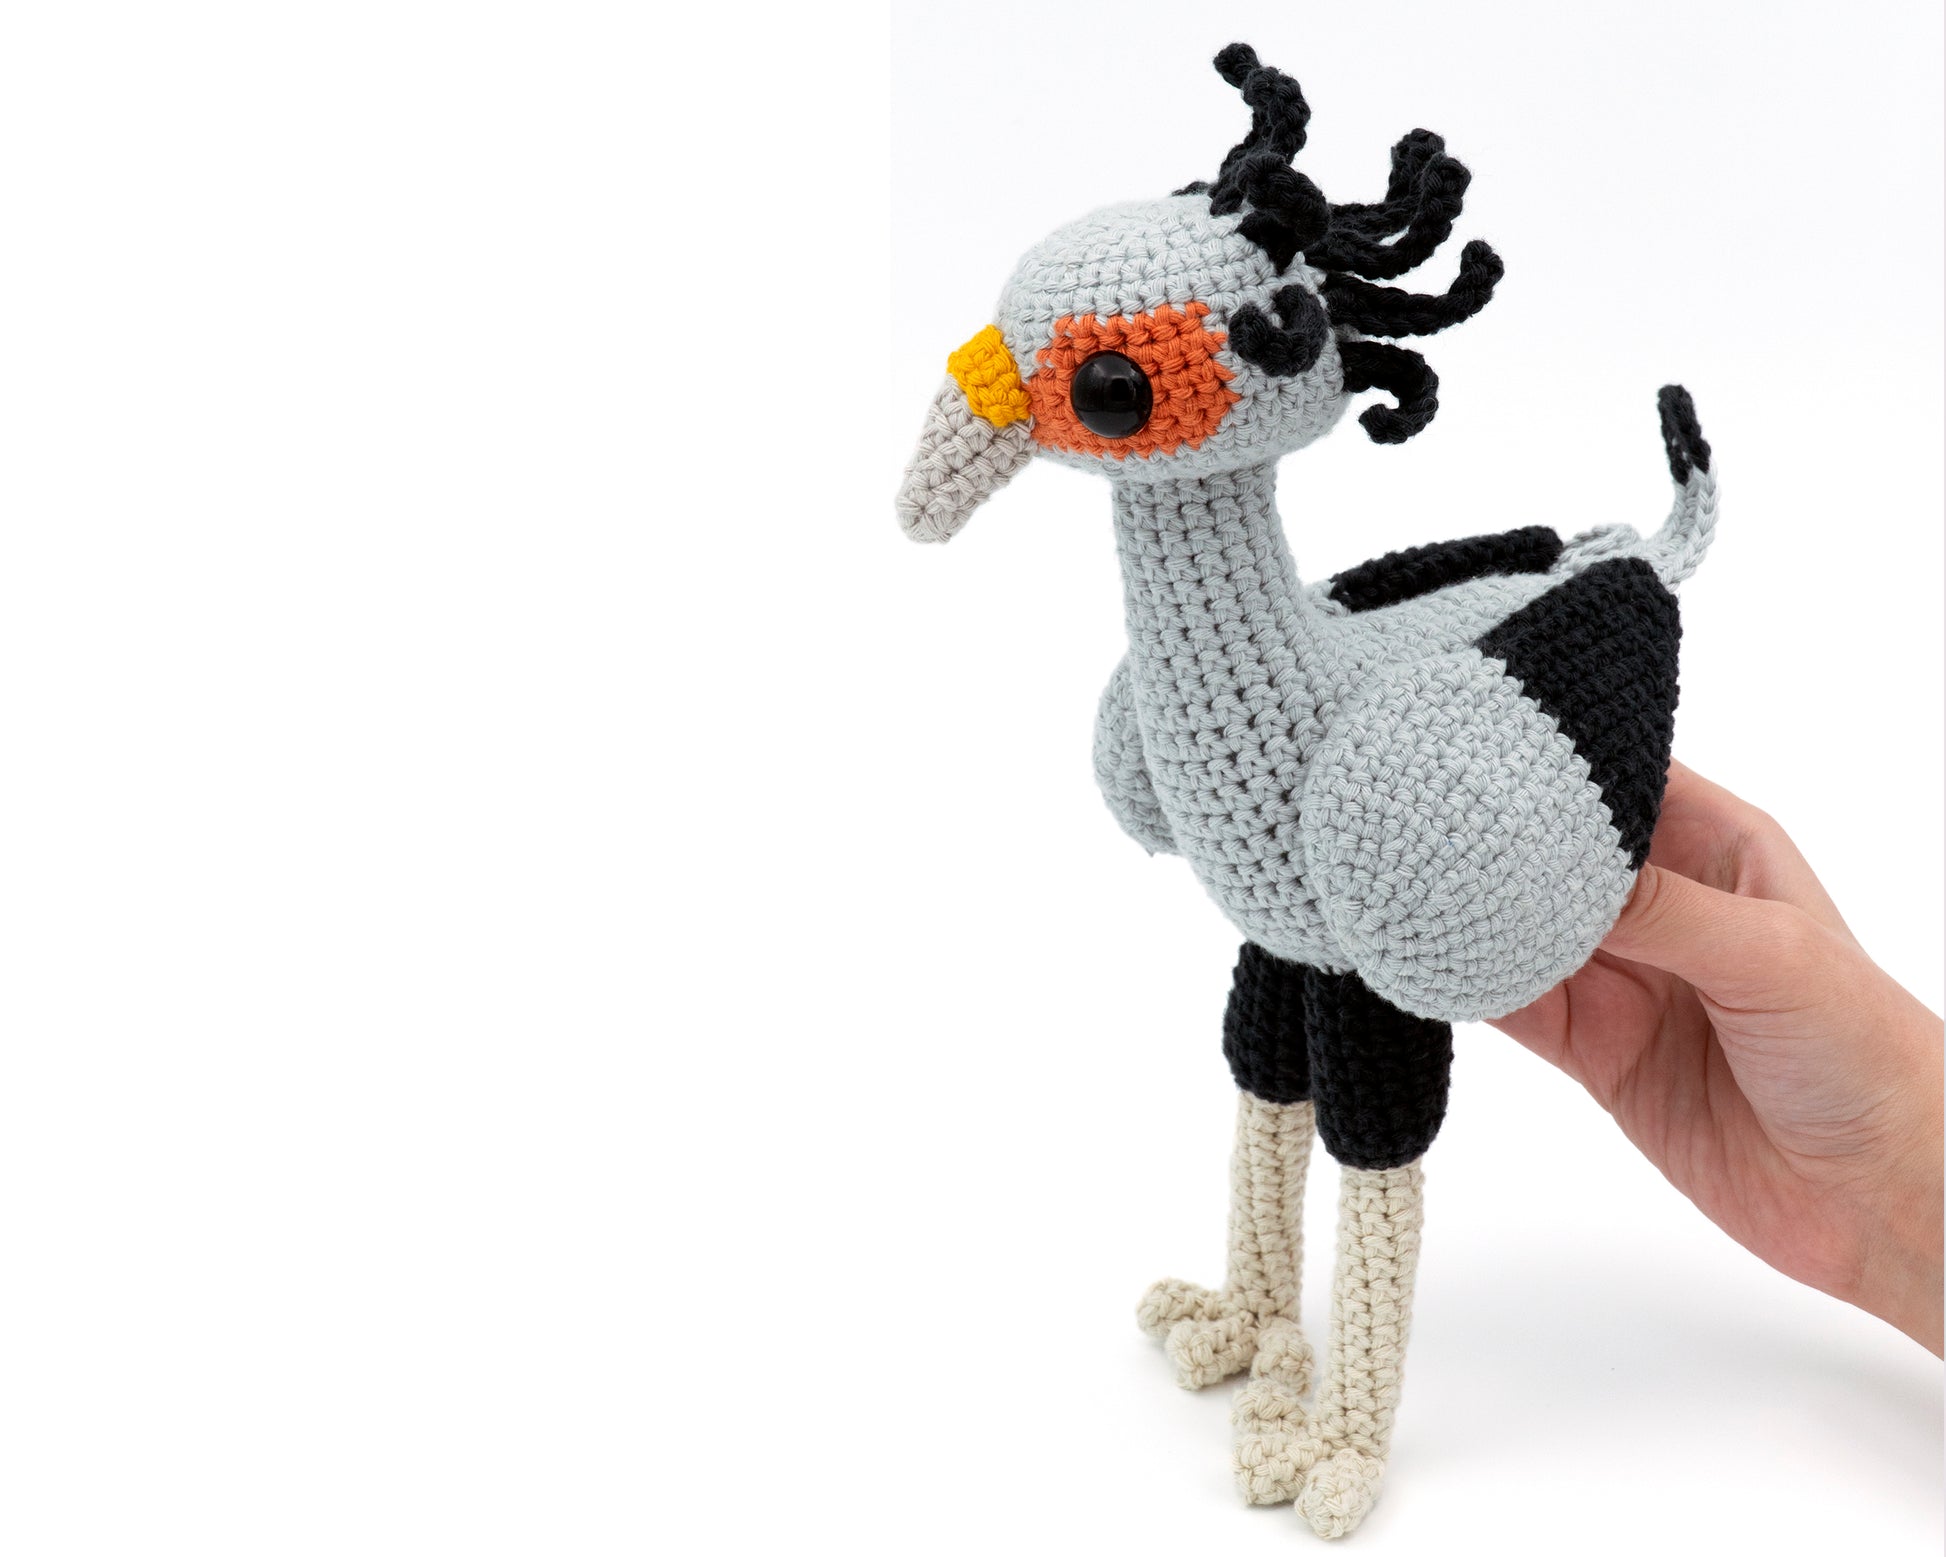 amigurumi crochet secretary bird pattern in hand for size comparison